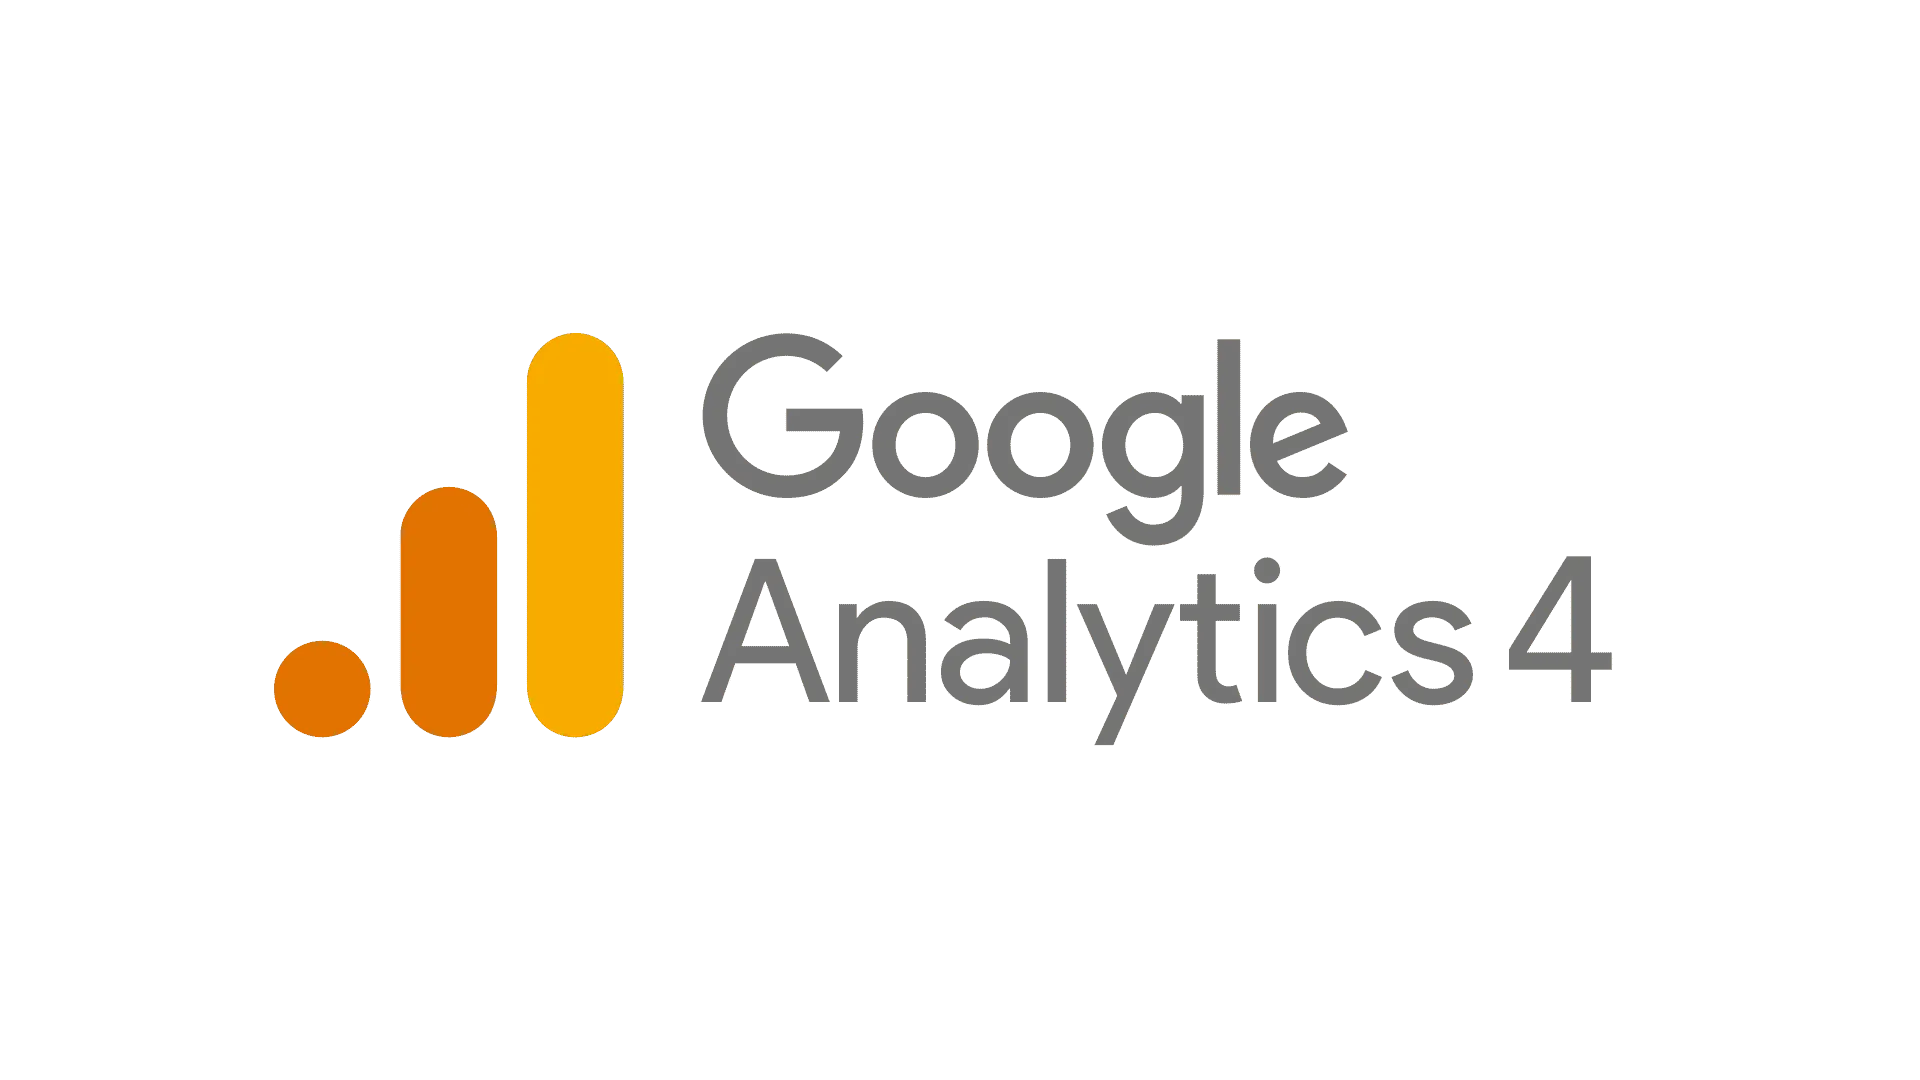 Google Analytics software for marketing analytics